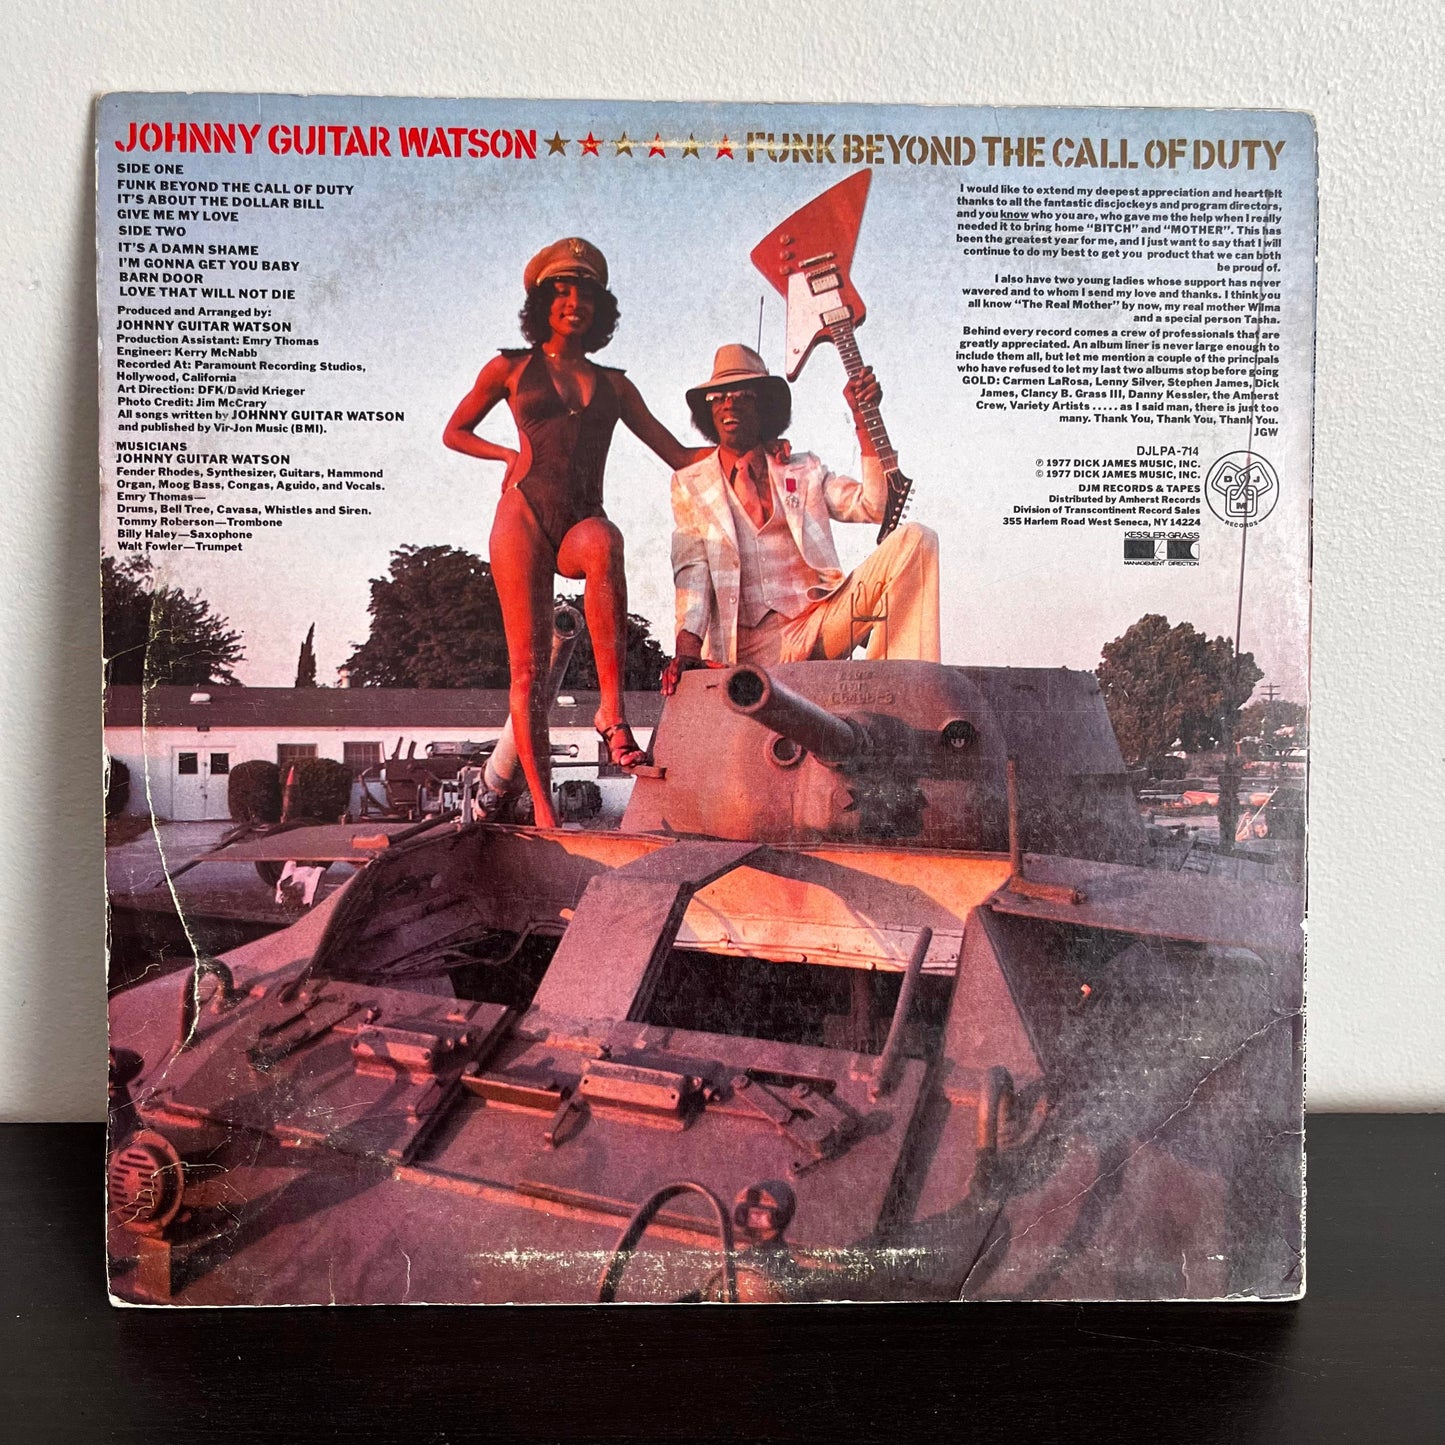 Funk Beyond The Call of Duty - Johnny Guitar Watson DJLPA-714 Vinyl Good